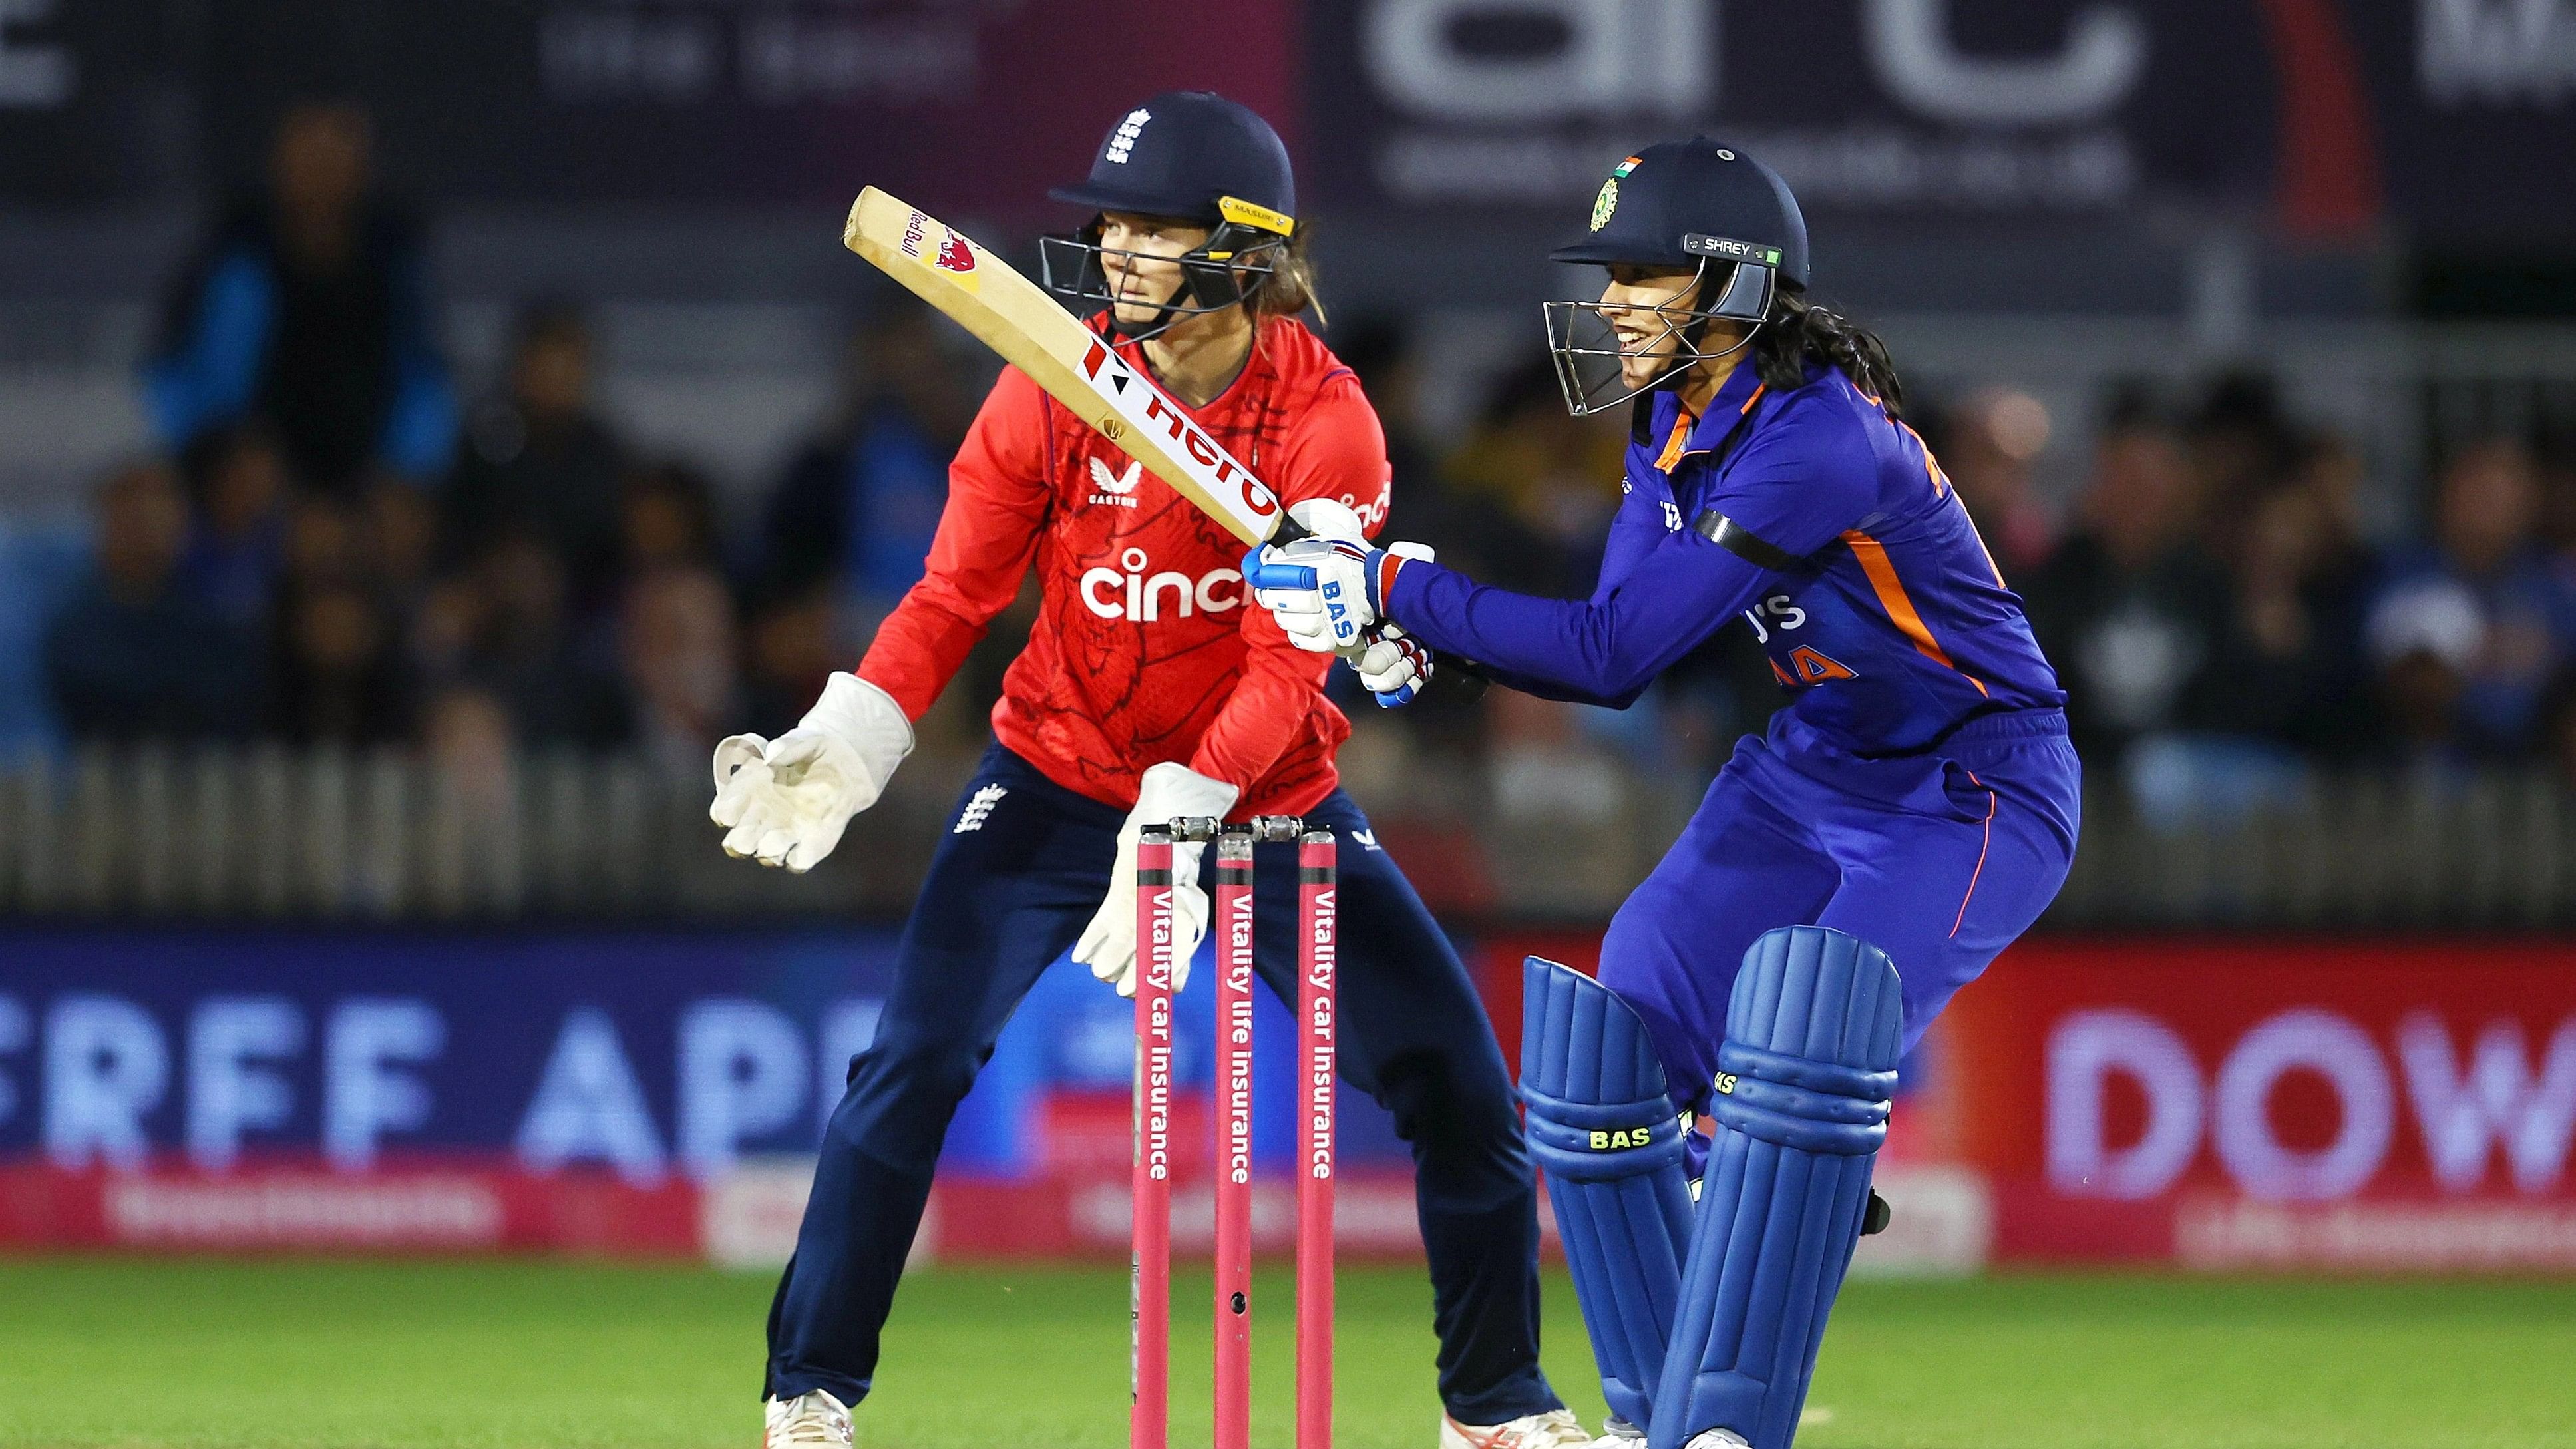 <div class="paragraphs"><p>Smriti Mandhana plays a shot during a T20 women's cricket match between India and England,&nbsp;Sept. 13, 2022.</p></div>